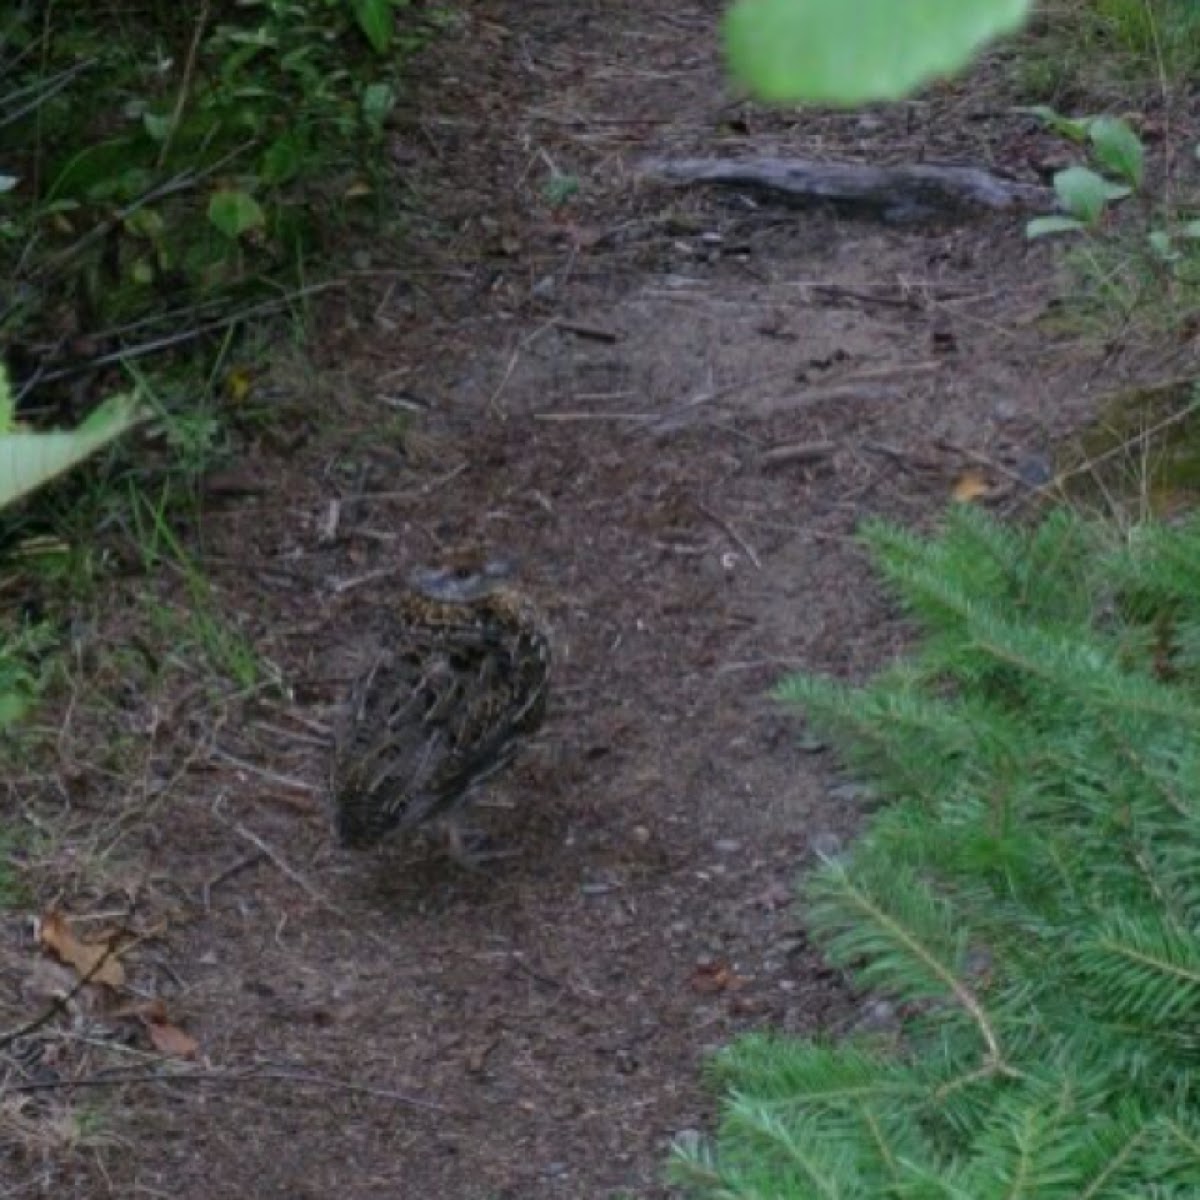 Northern bobwhite quail